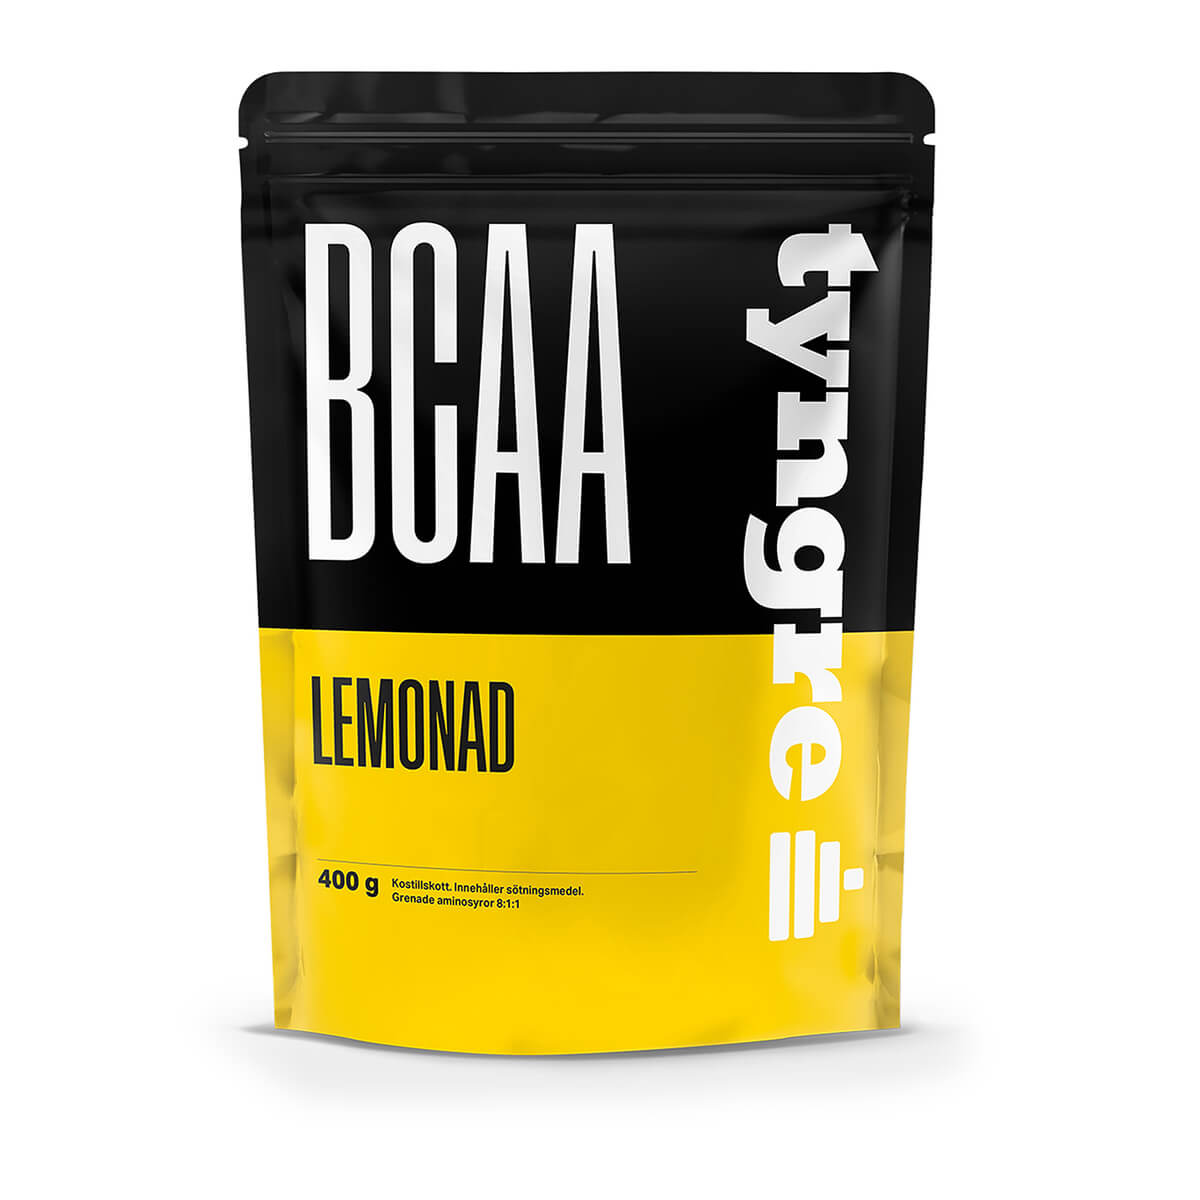 BCAA Lemonad, 400 g, Tyngre